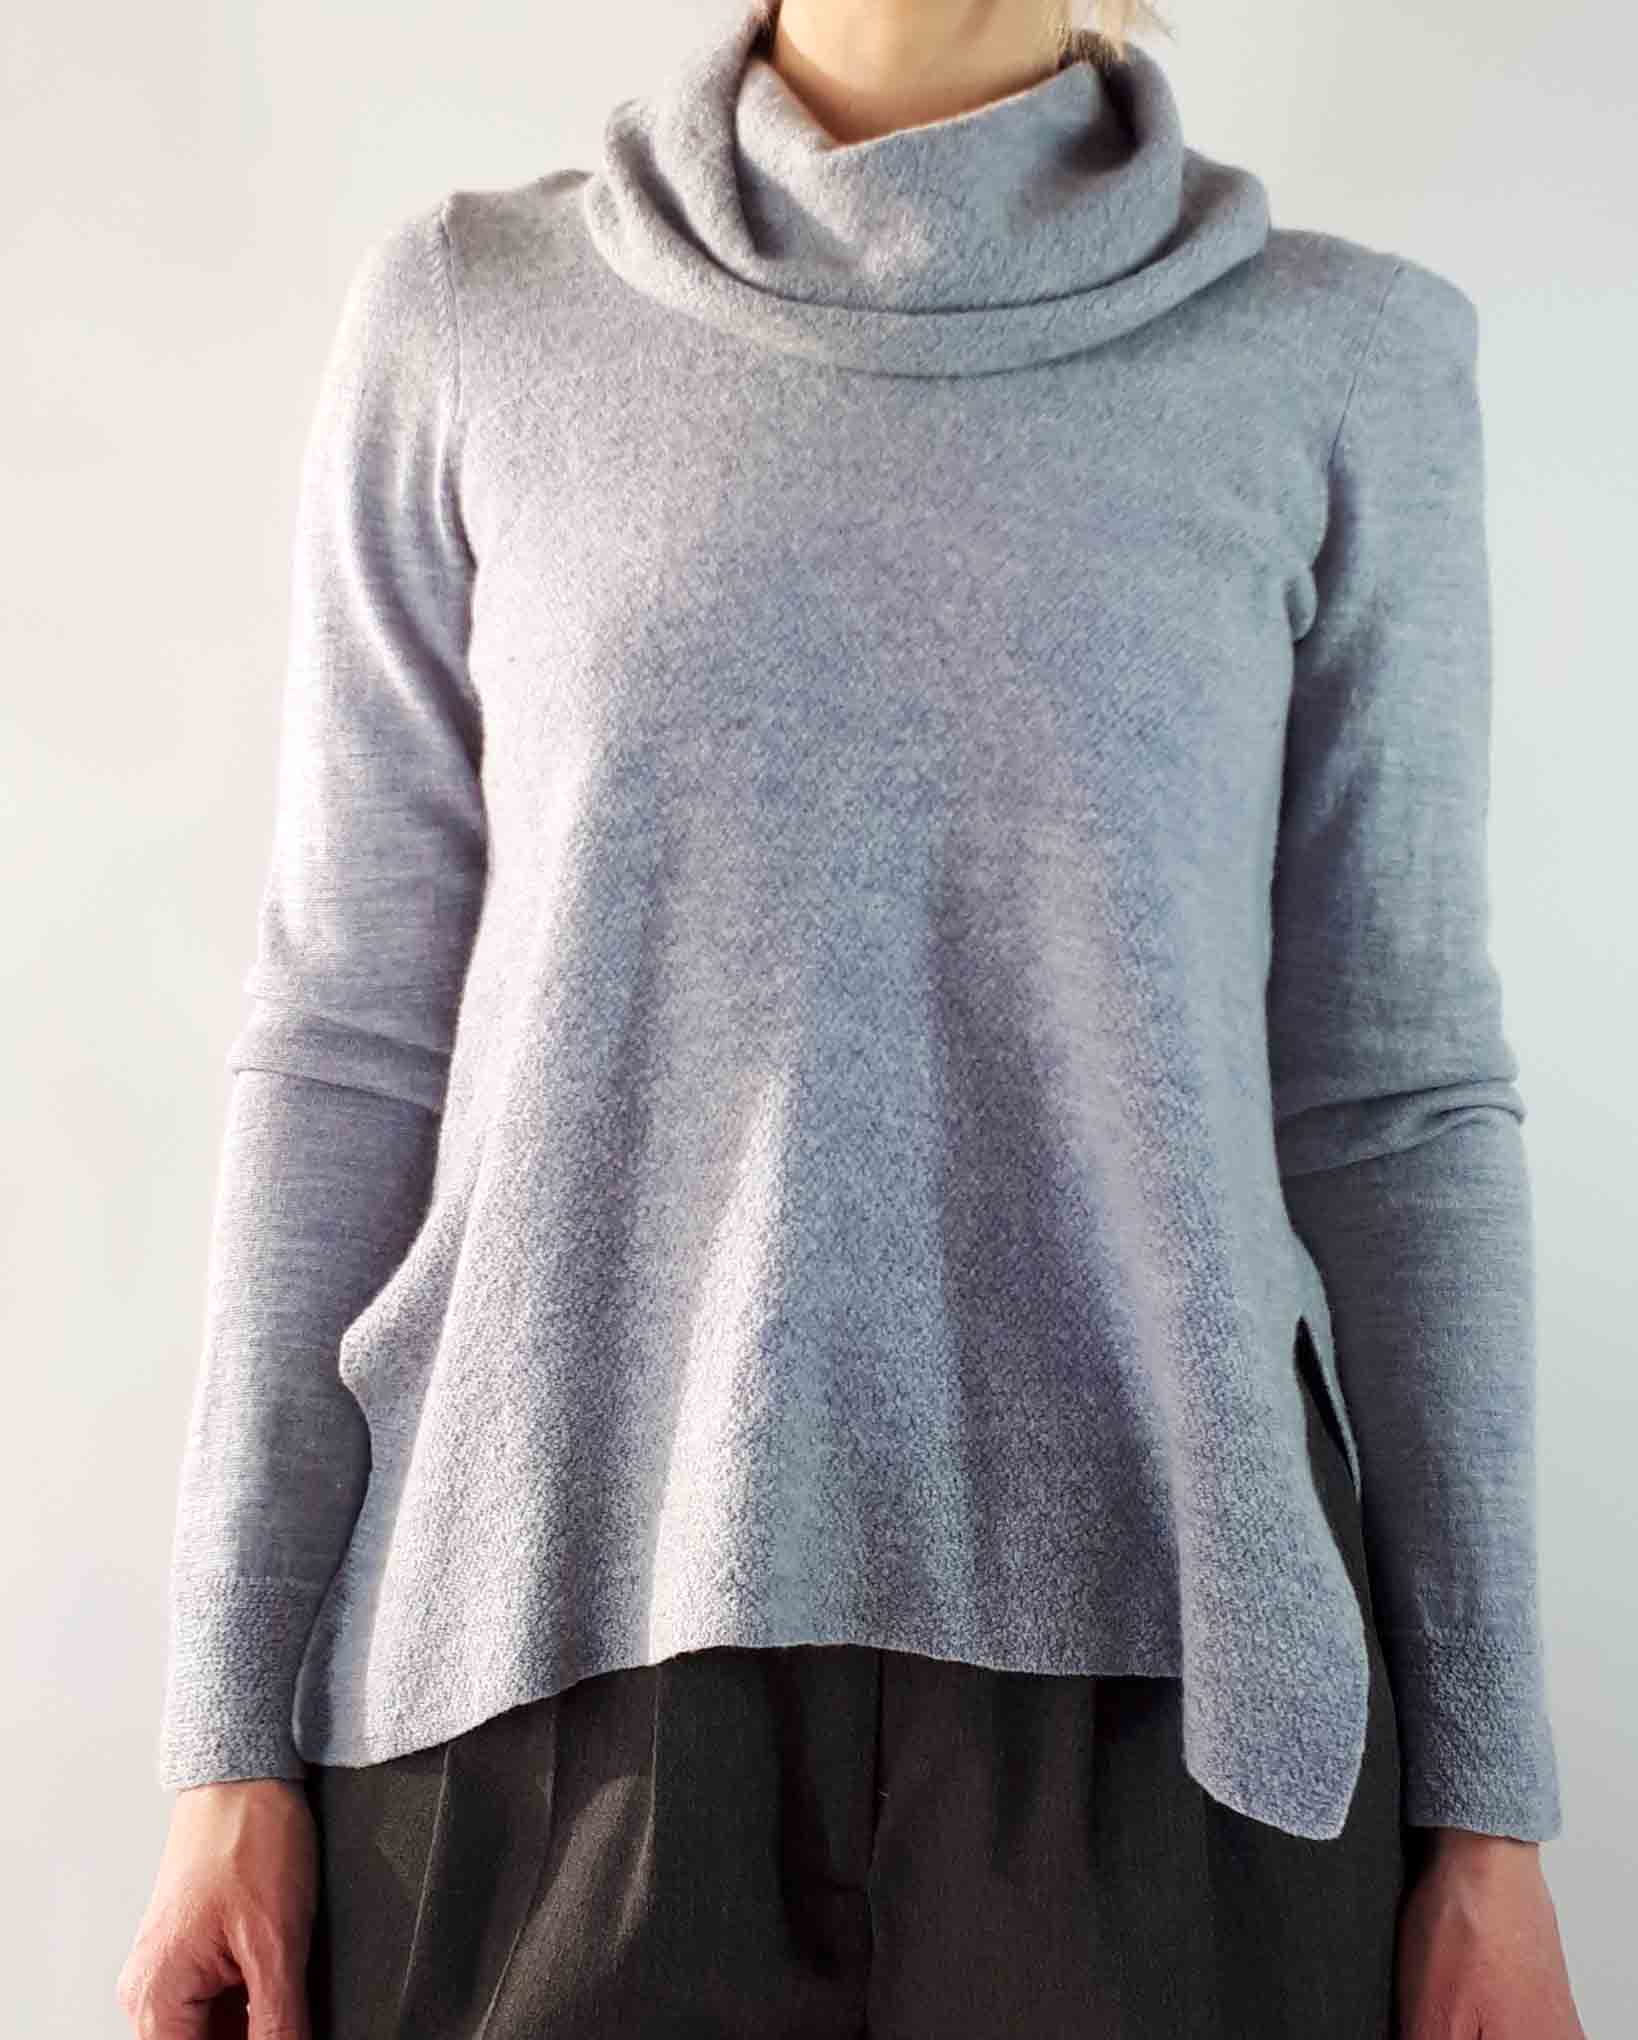 Adrienne Vittadini Grey Merino Wool Turtleneck Sweater